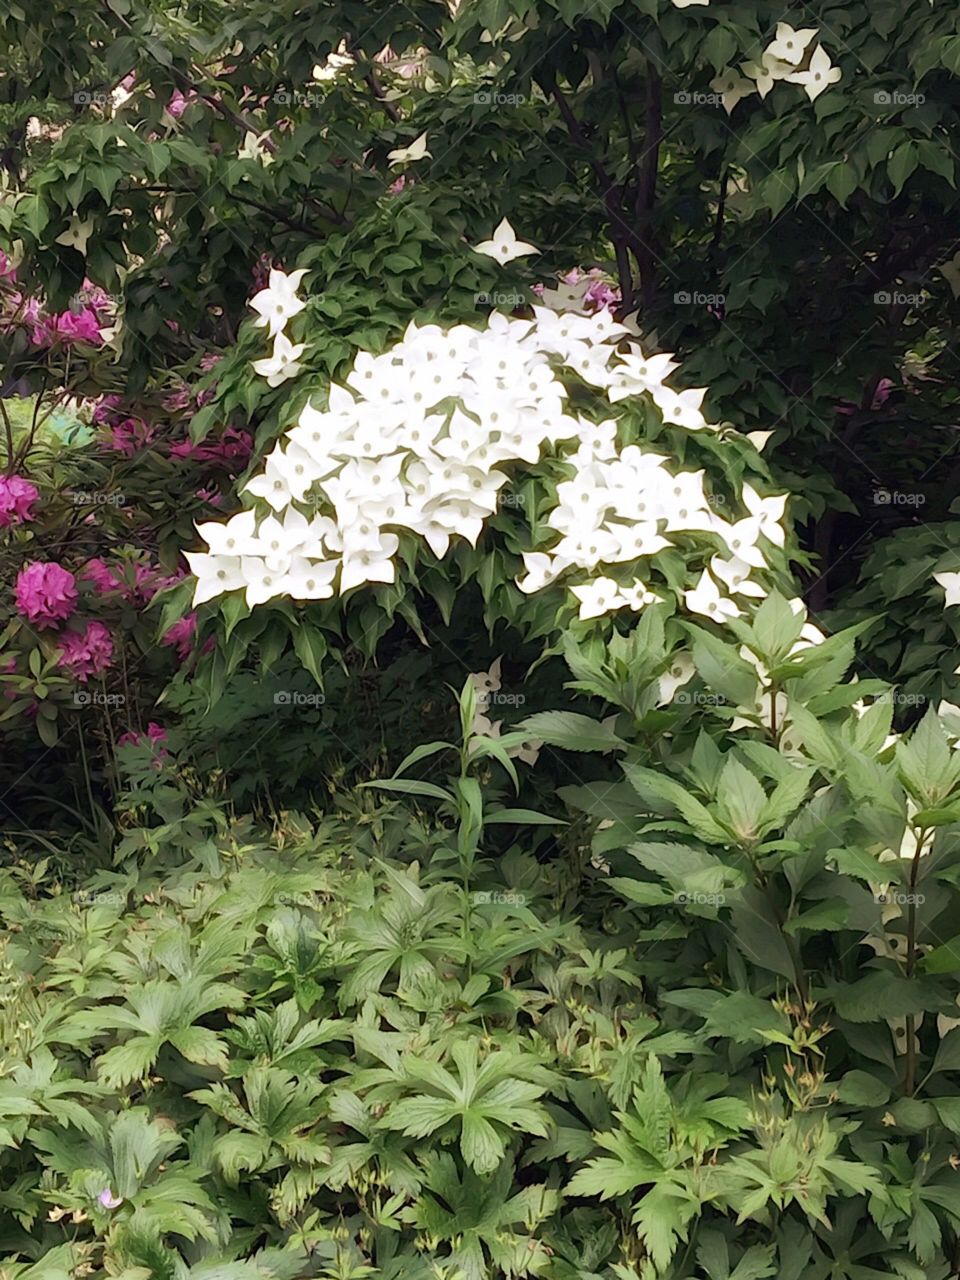 Dogwood Flowers- Central Park, New York City. Instagram,@PennyPeronto